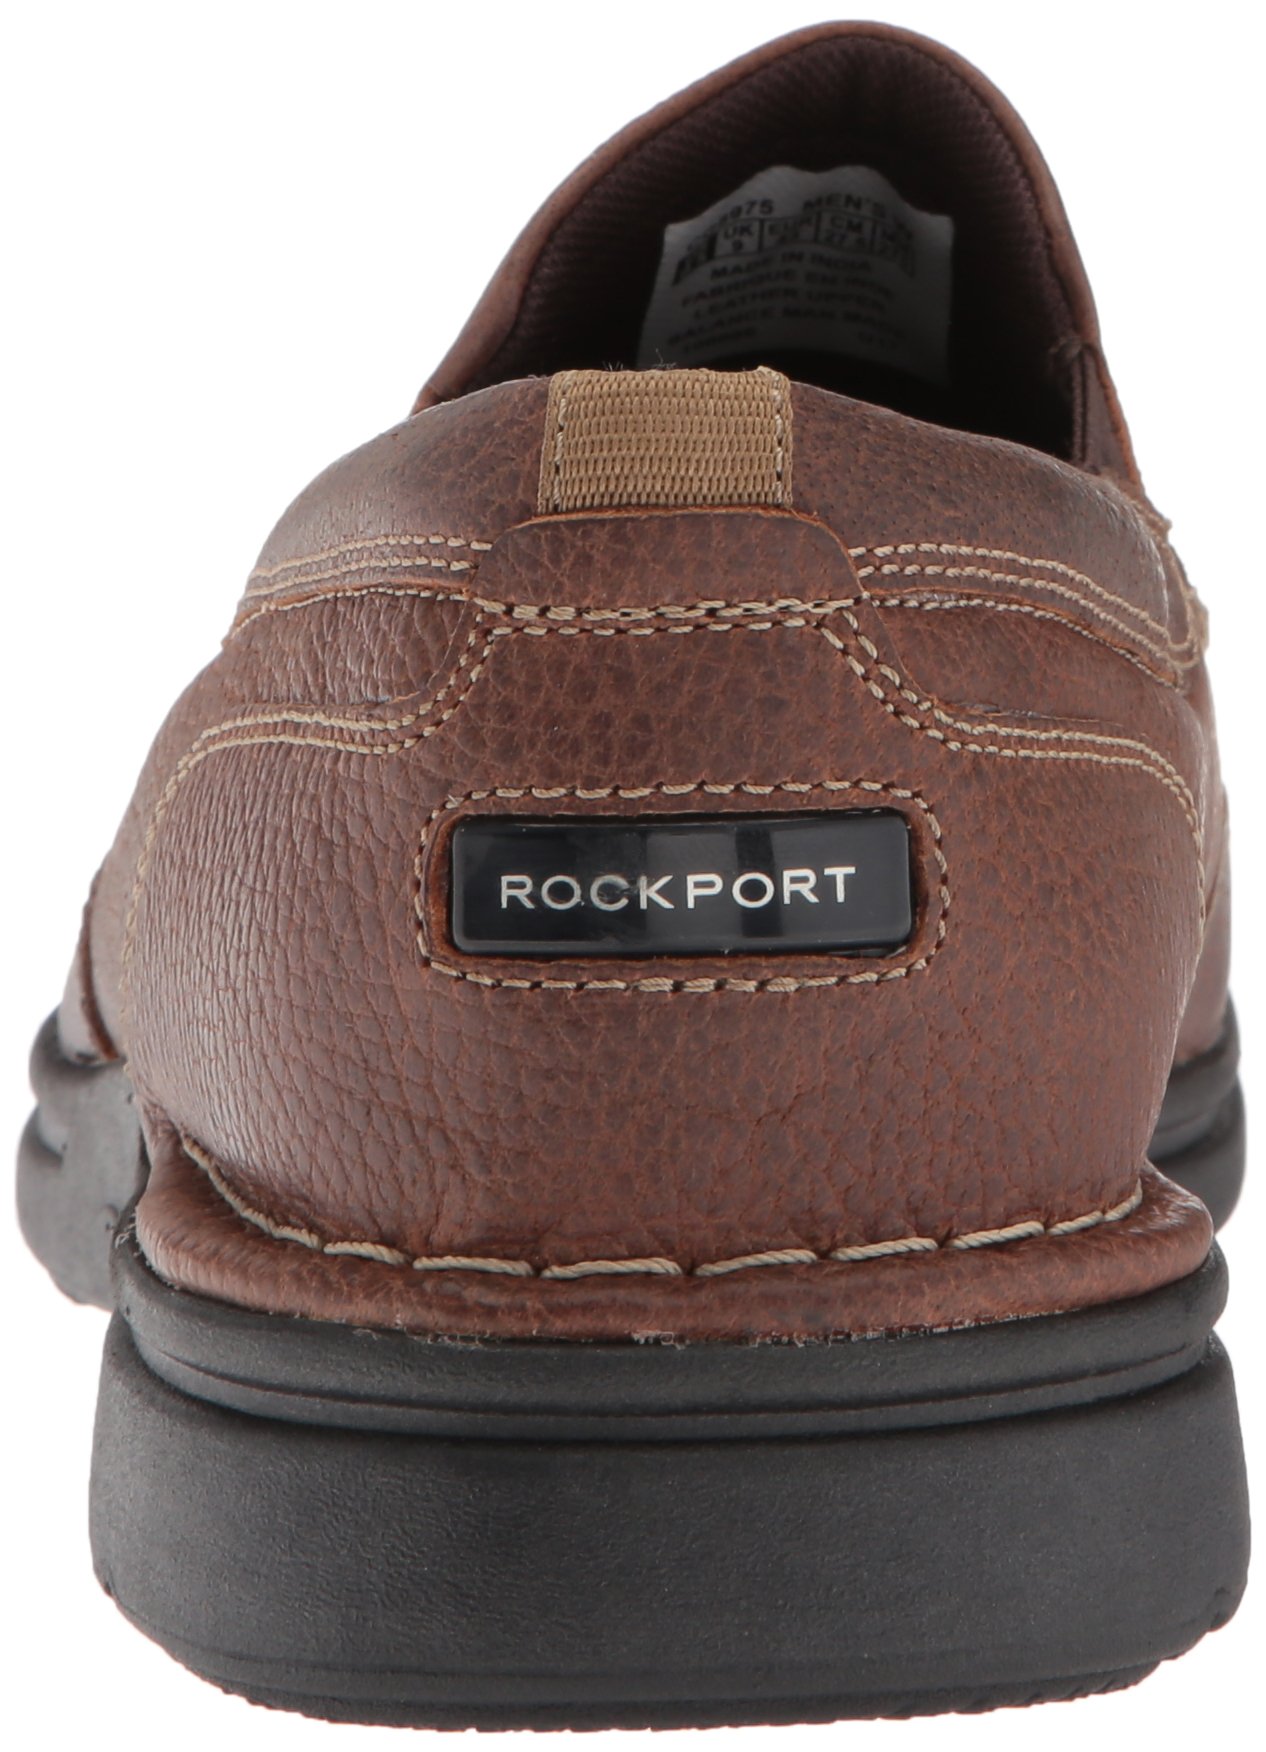 Rockport Men's Eureka Plus Slip on Oxford